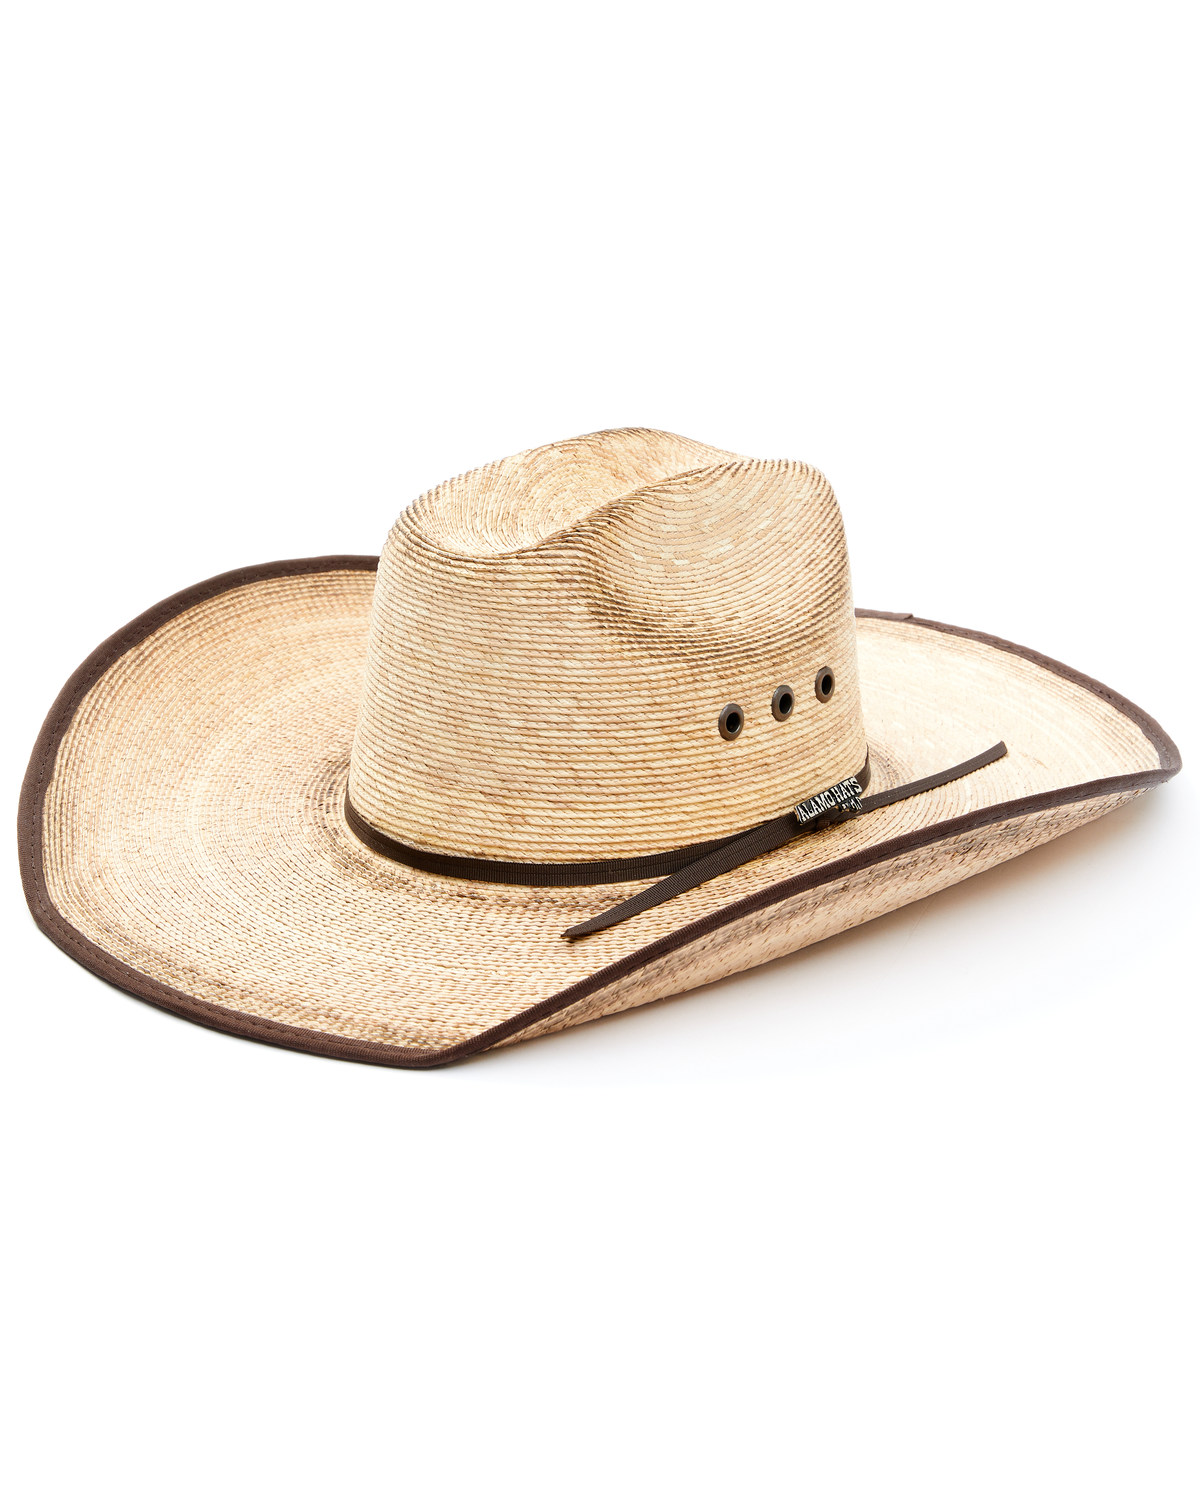 Twister Fired Straw Cowboy Hat